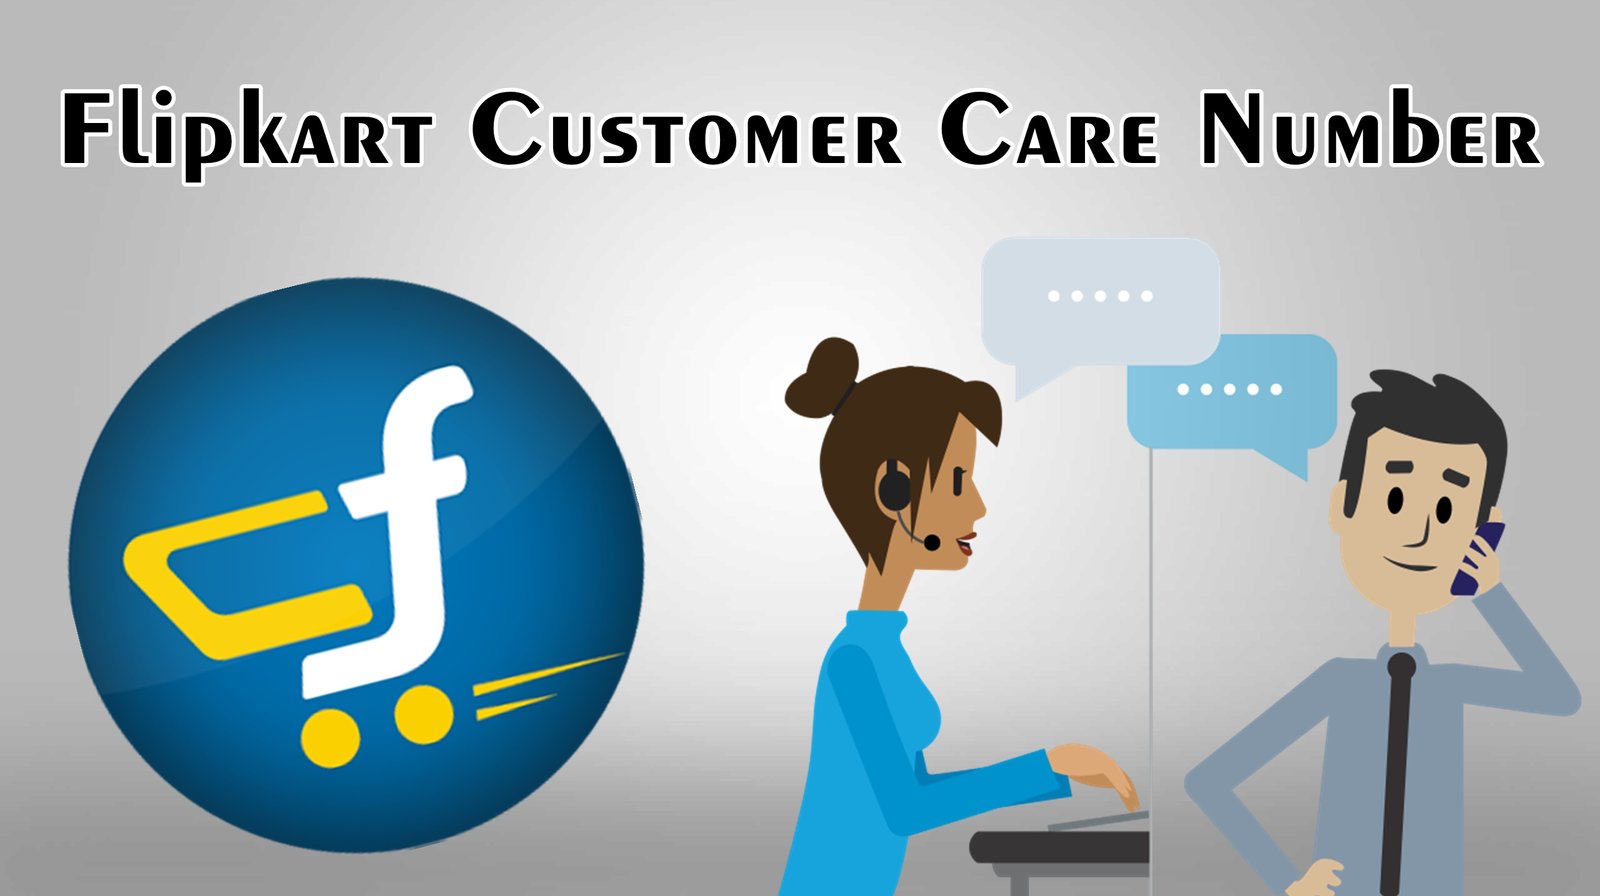 Flipkart Customer Care Number